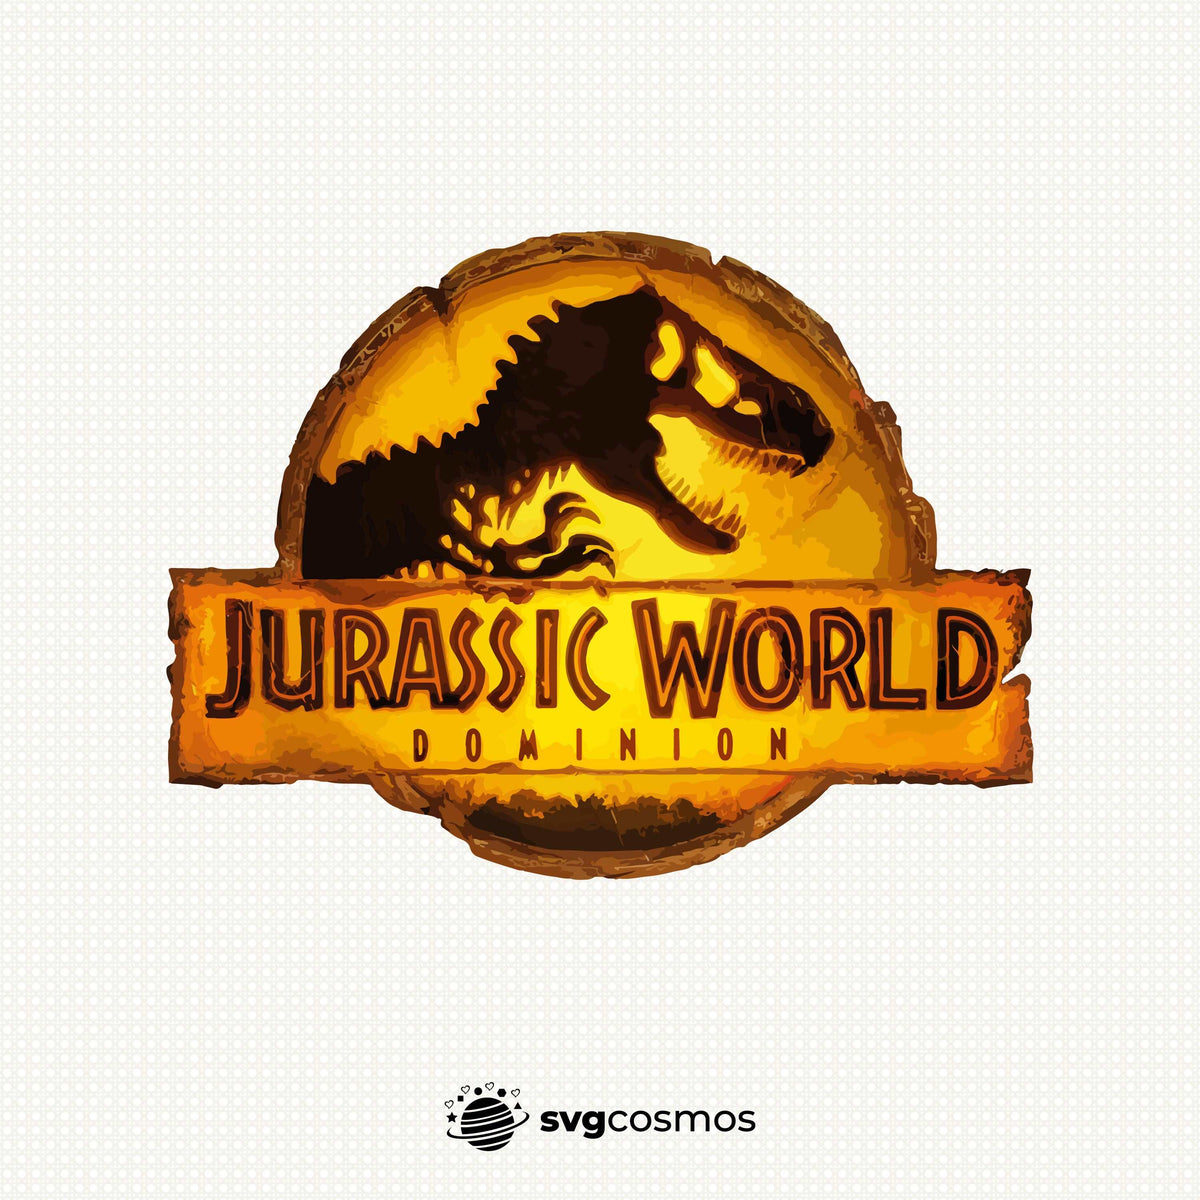 jurassic world logo vector